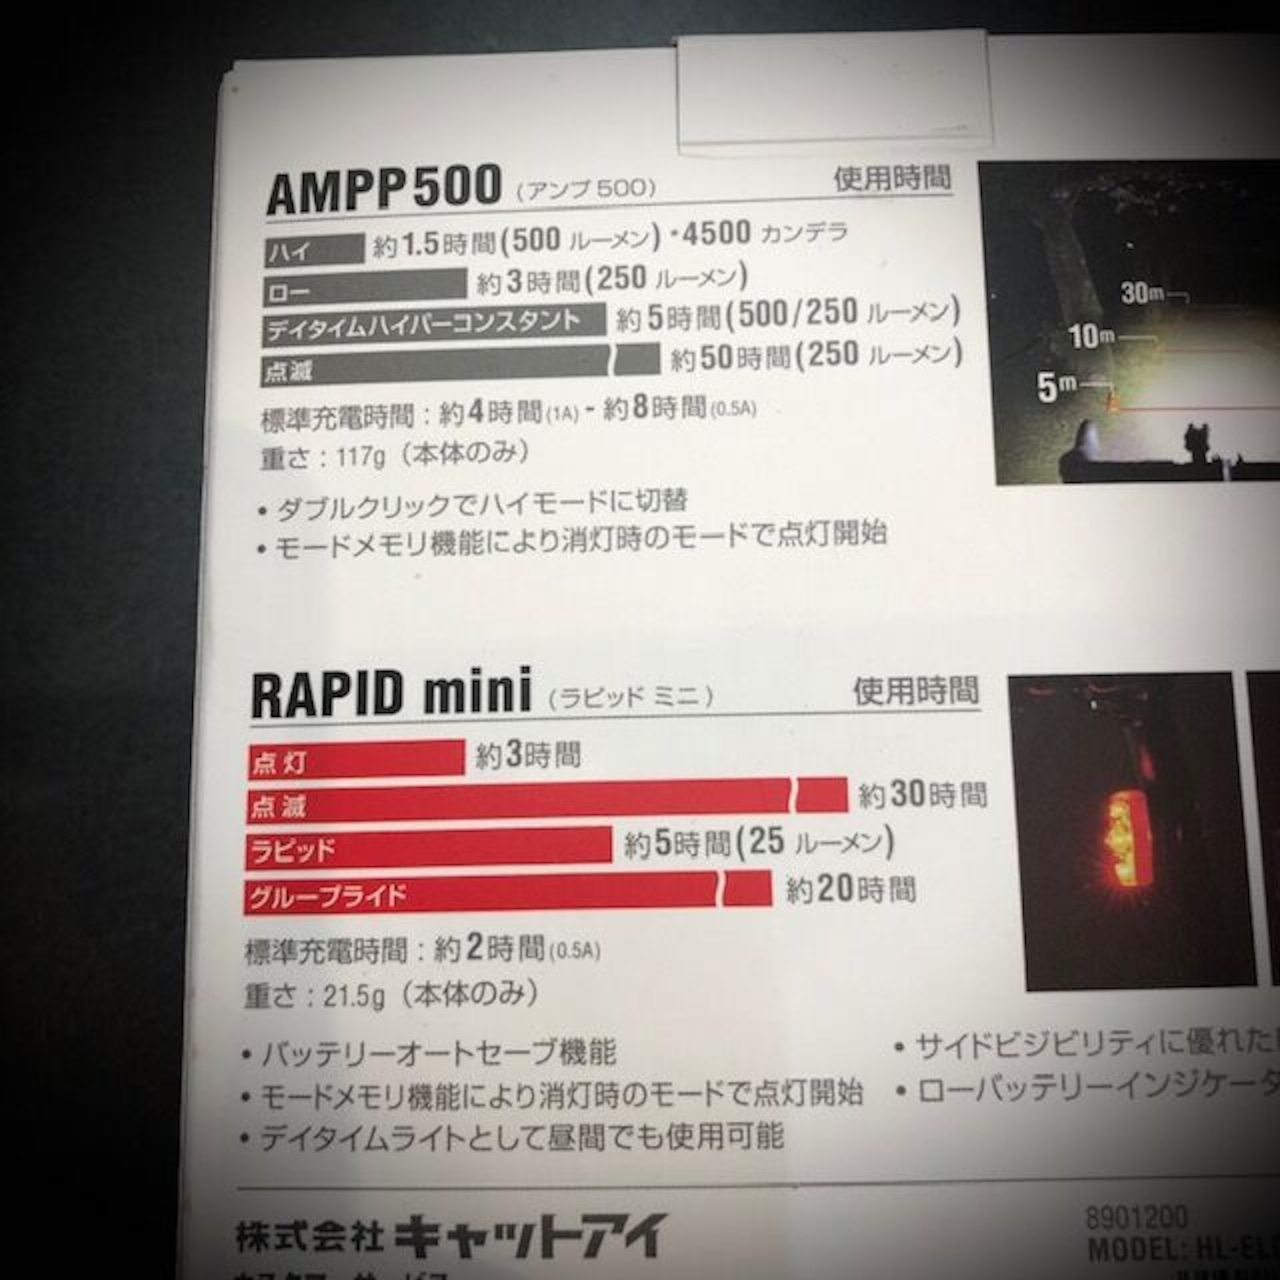 BROMPTON [フロント & リアライト] のセット [AMPP500/RapidMini]